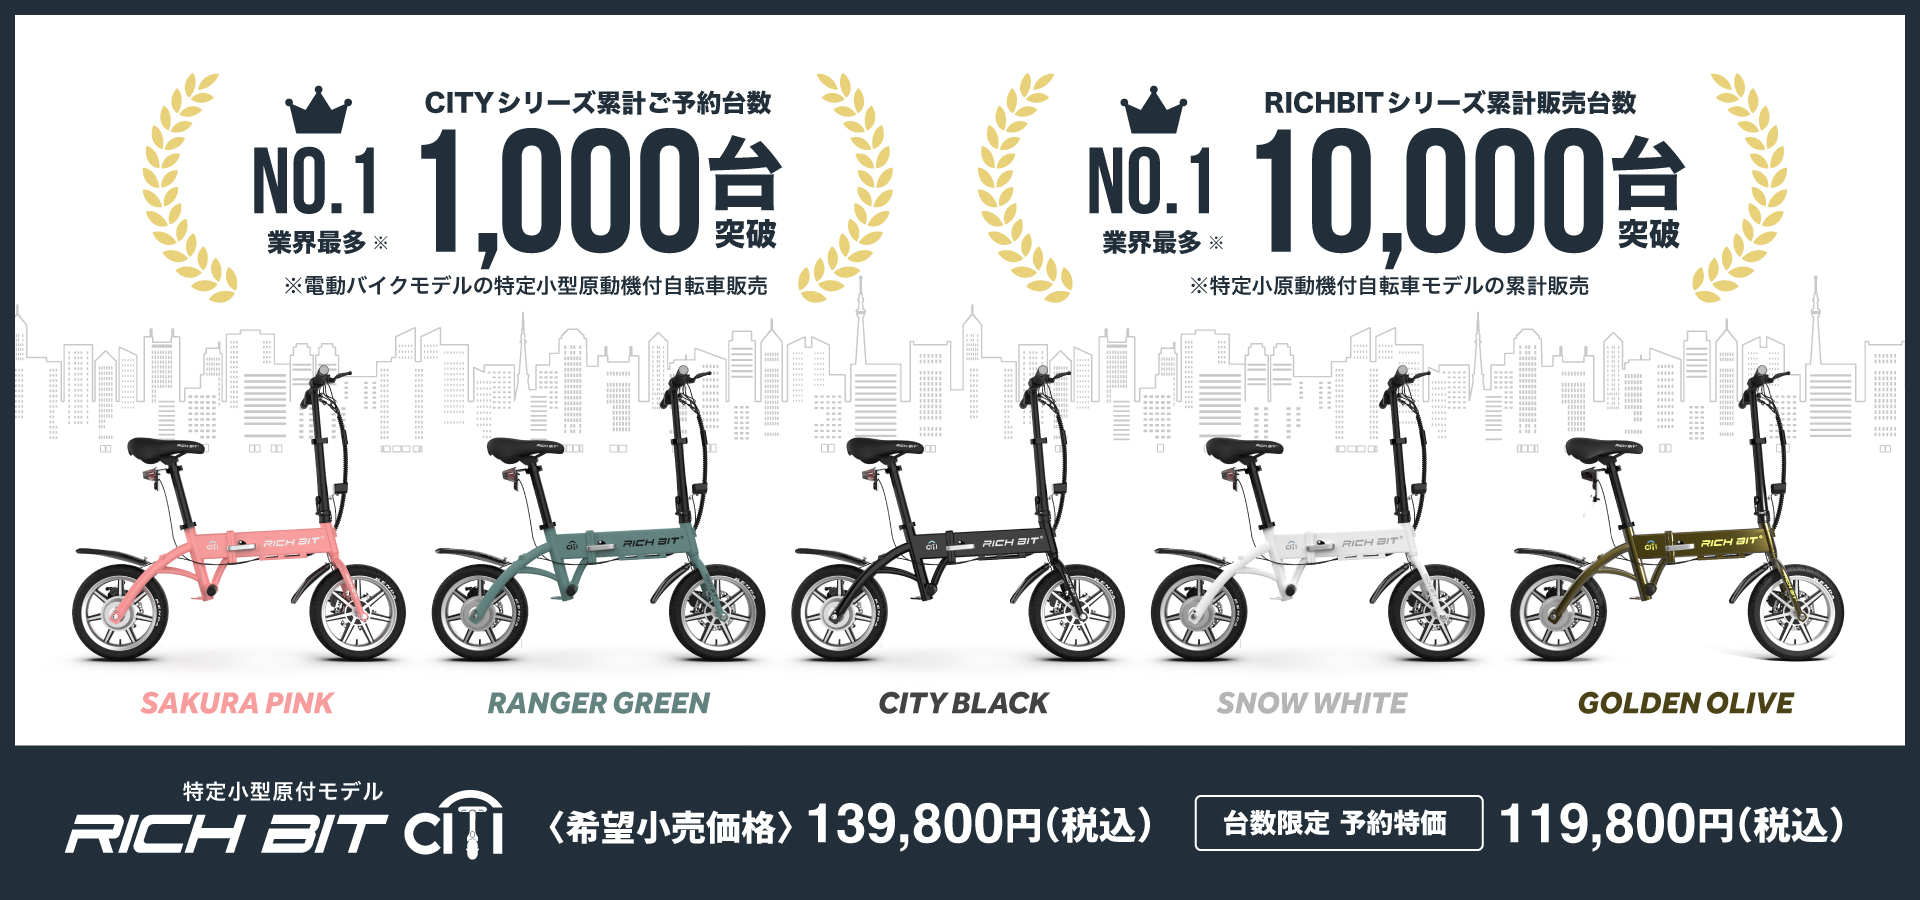 特定小型原動機付自転車区分の「RICHIBIT」シリーズ２機種、国内累計販売台数10,000台突破のサブ画像6